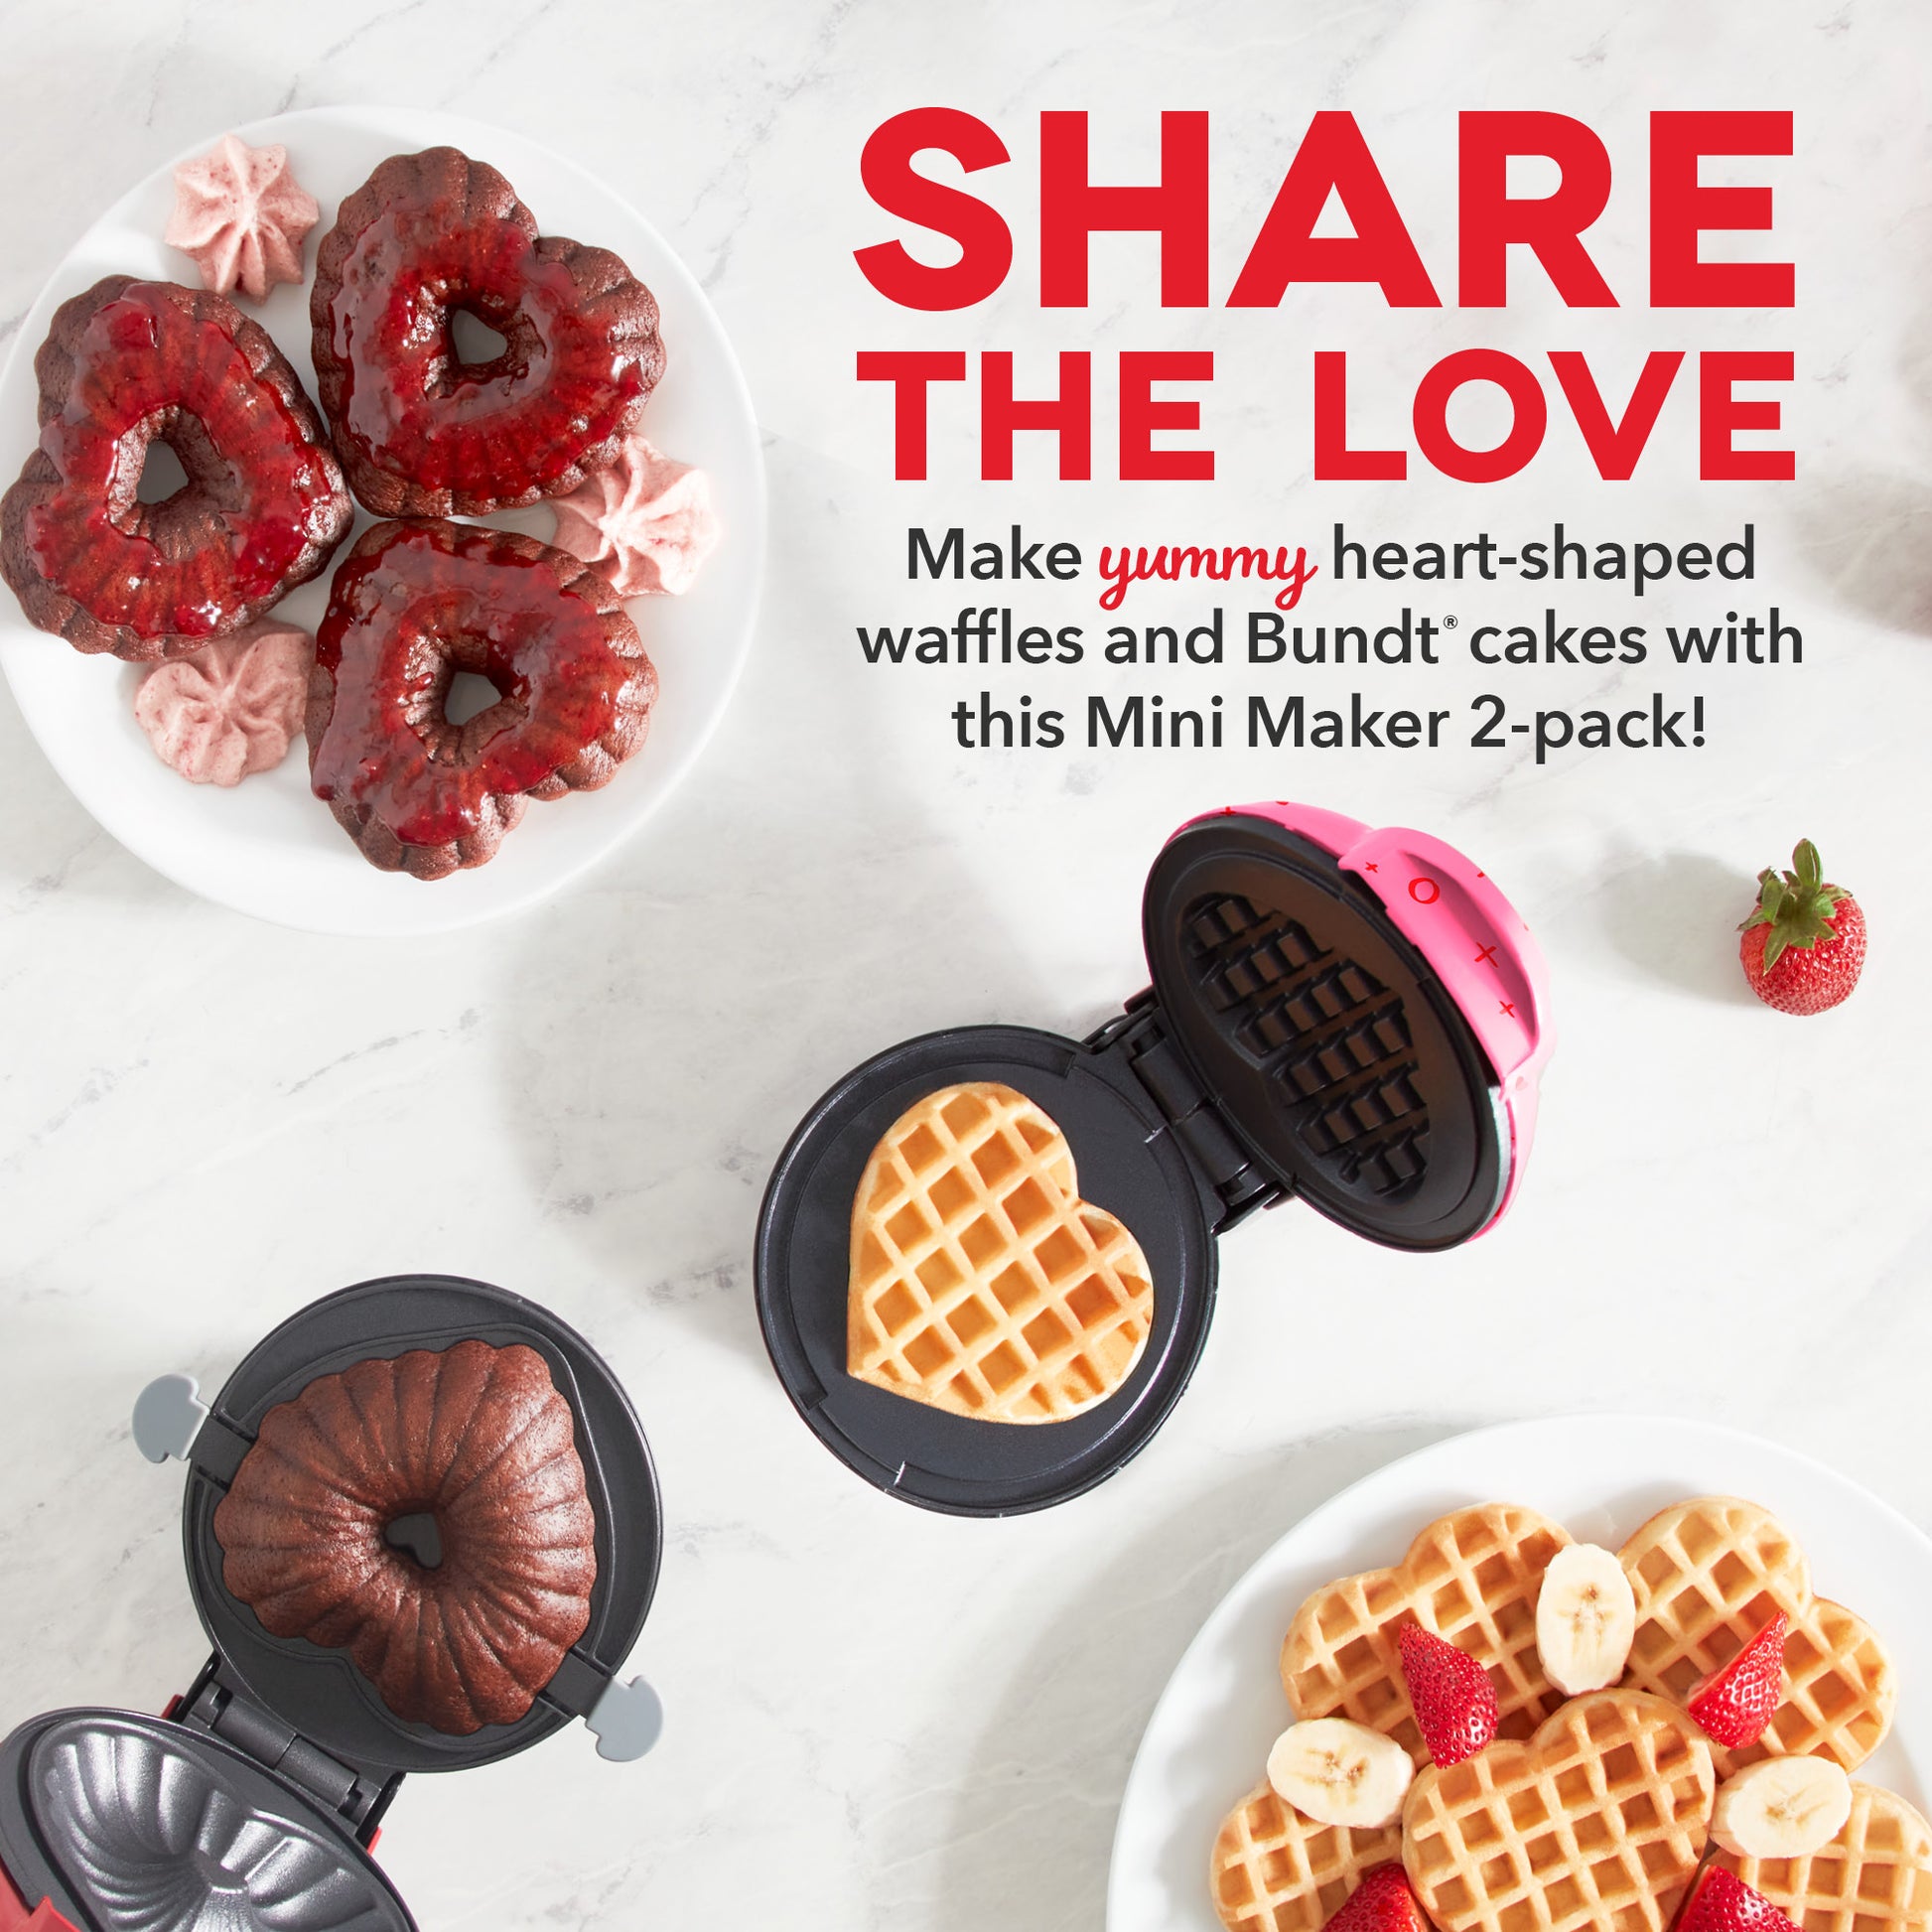 NEW Dash Mini Bundt Cake Maker Heart Shape Red Love Valentine's